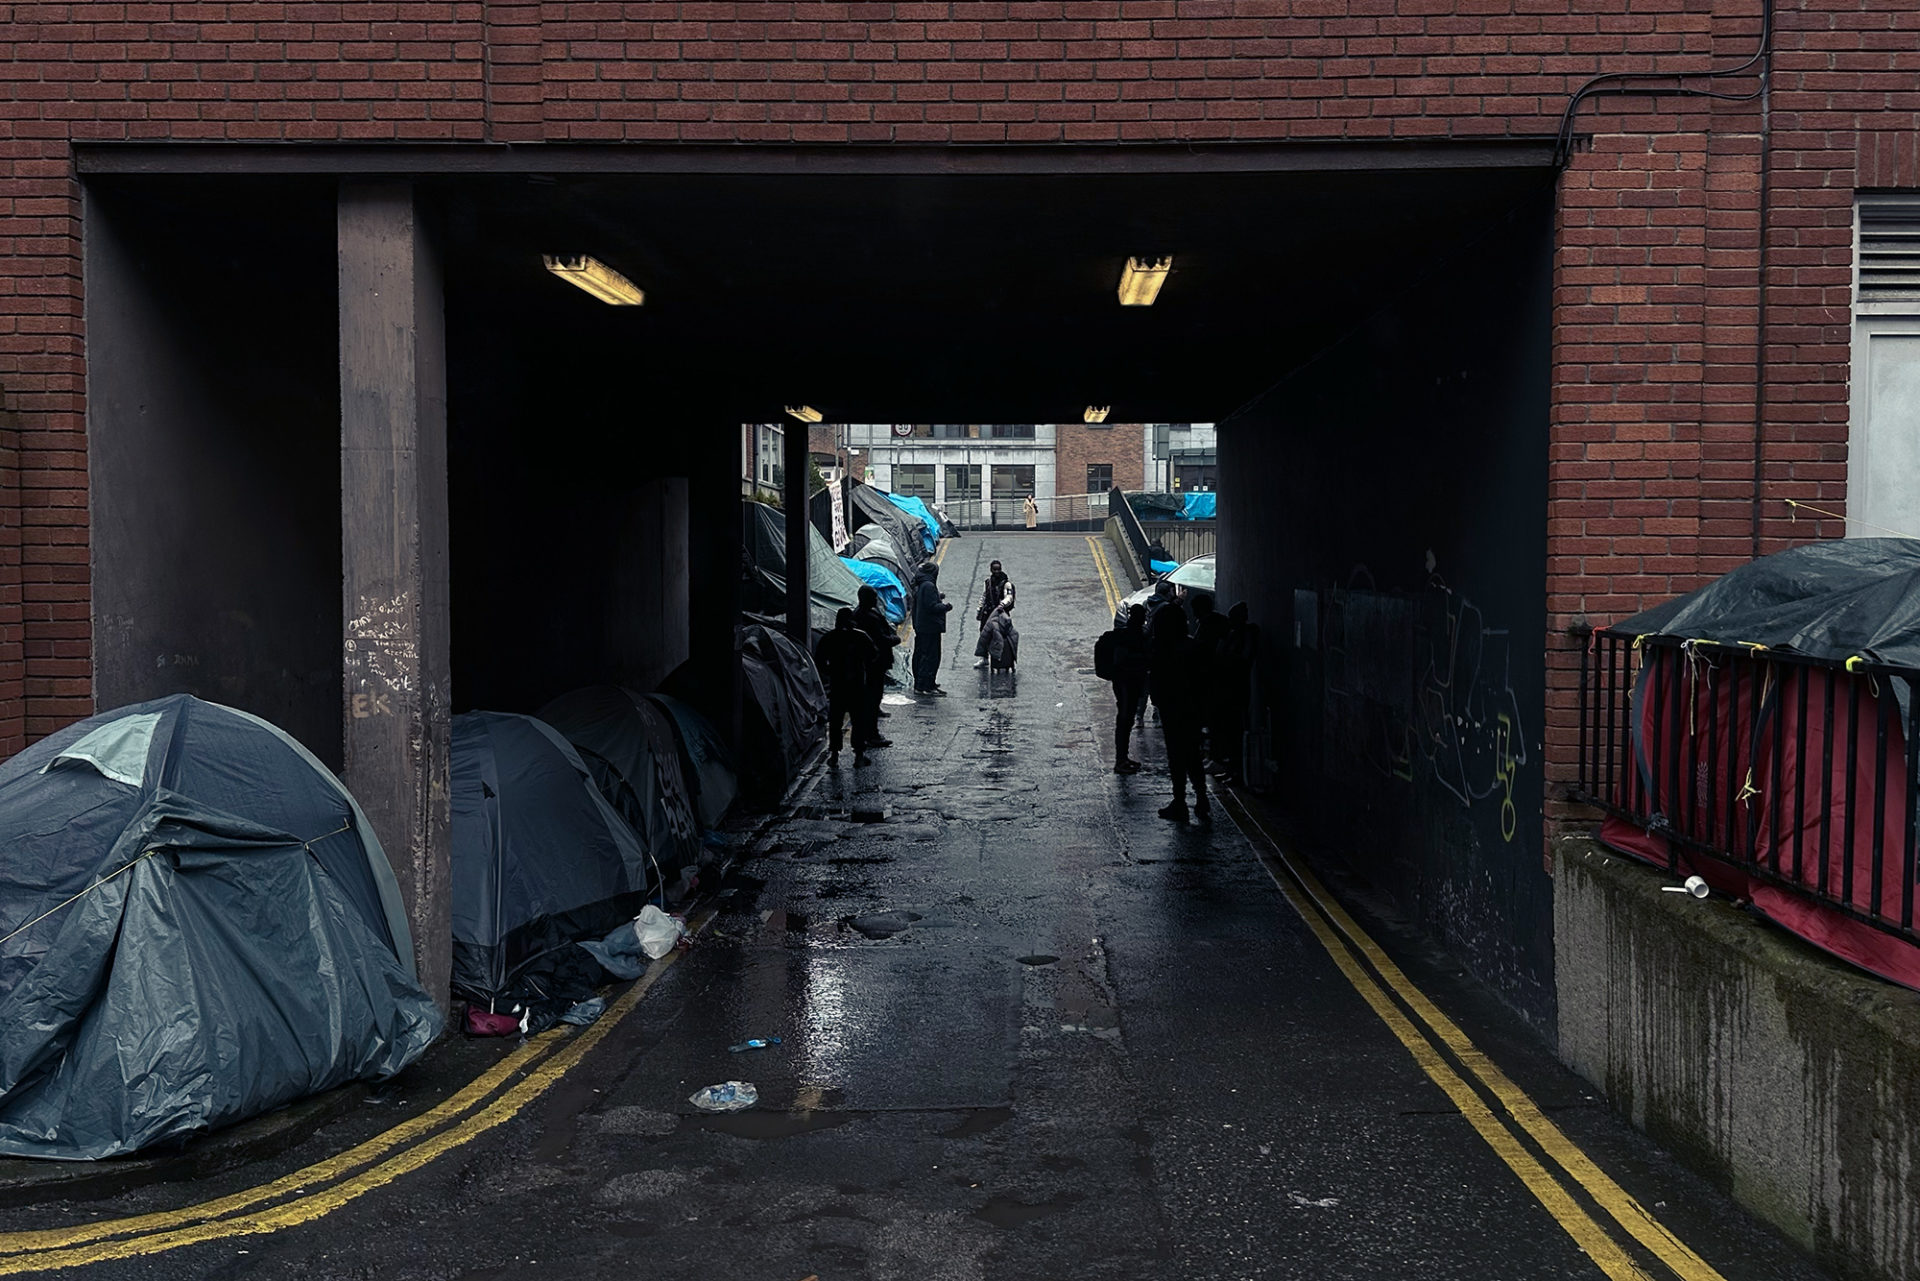 Asylum seekers sleeping in tents outside Dublin’s International Protection Office